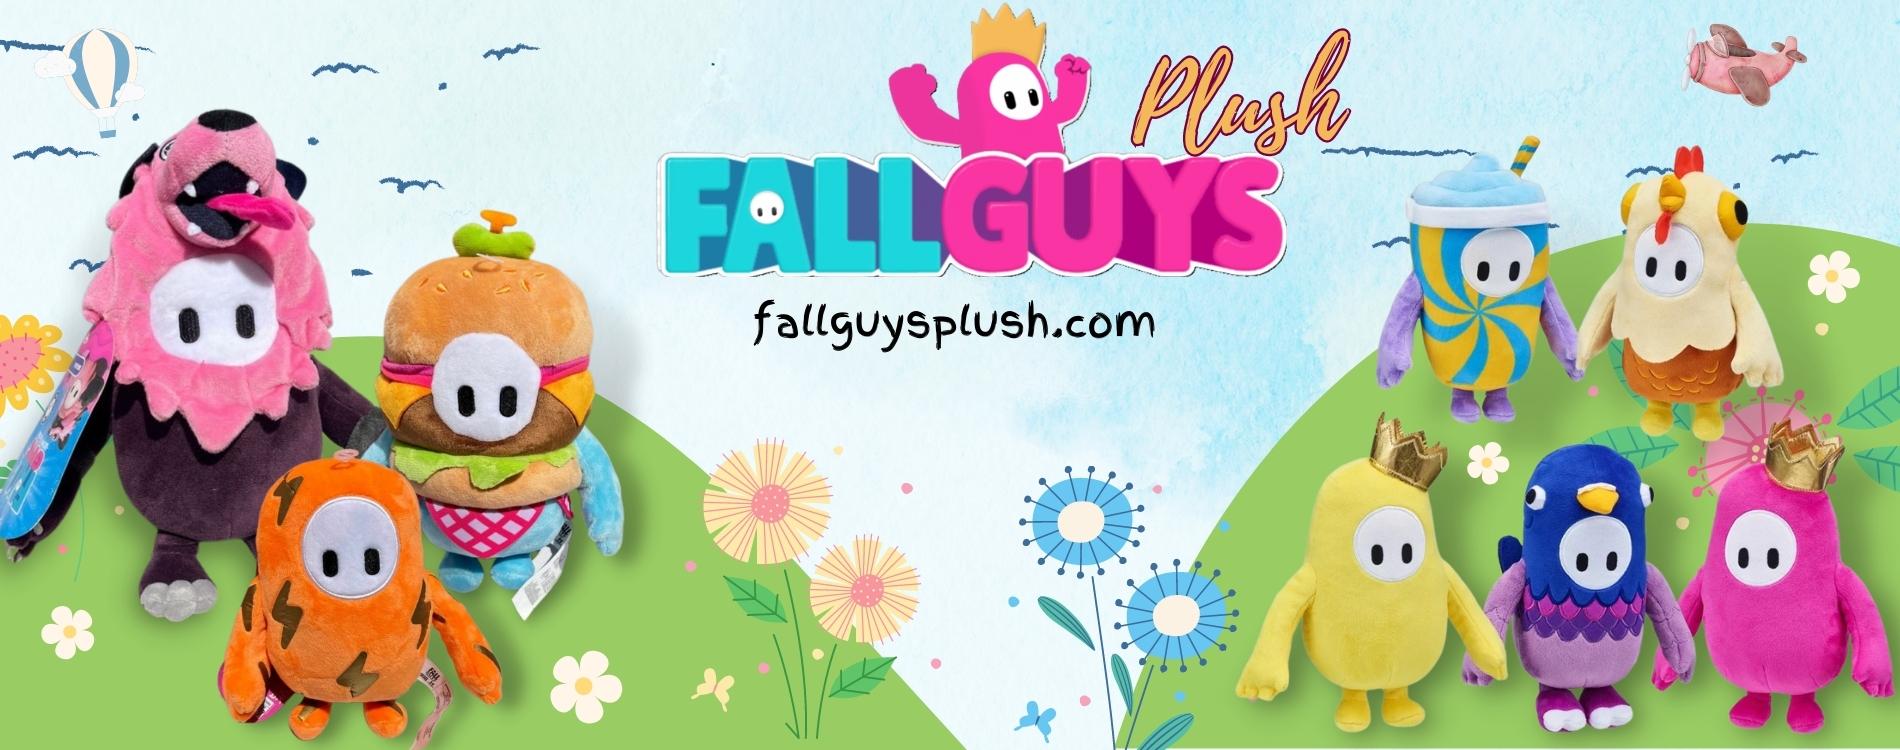 Banner 1 - Fall Guys Plush